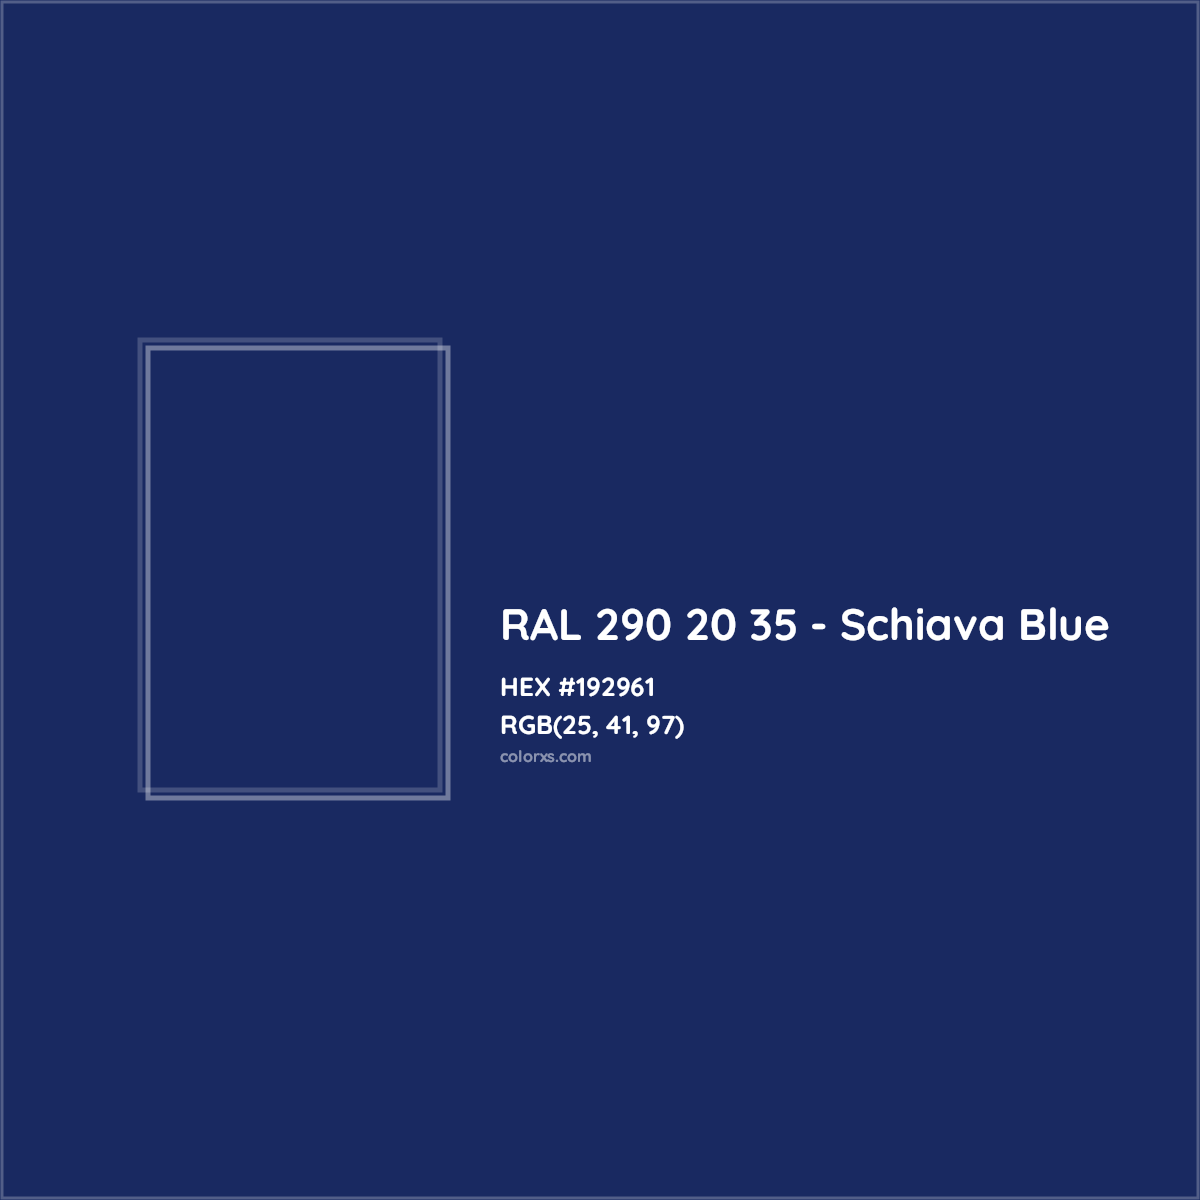 HEX #192961 RAL 290 20 35 - Schiava Blue CMS RAL Design - Color Code